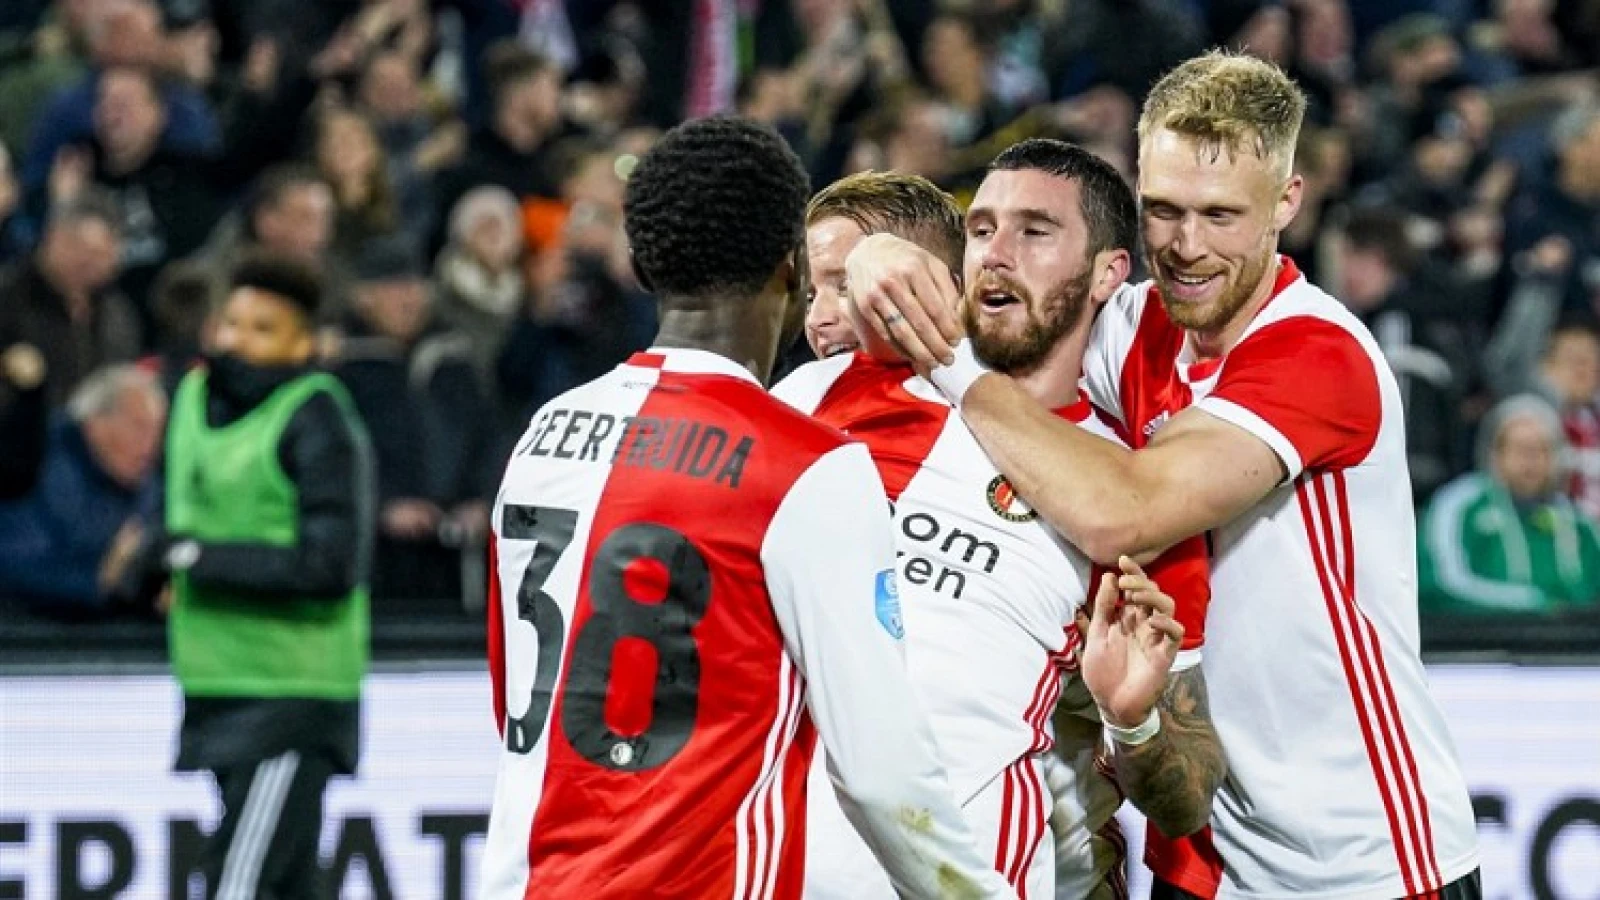 Feyenoord wint door rake kopbal Senesi in slotfase van RKC Waalwijk